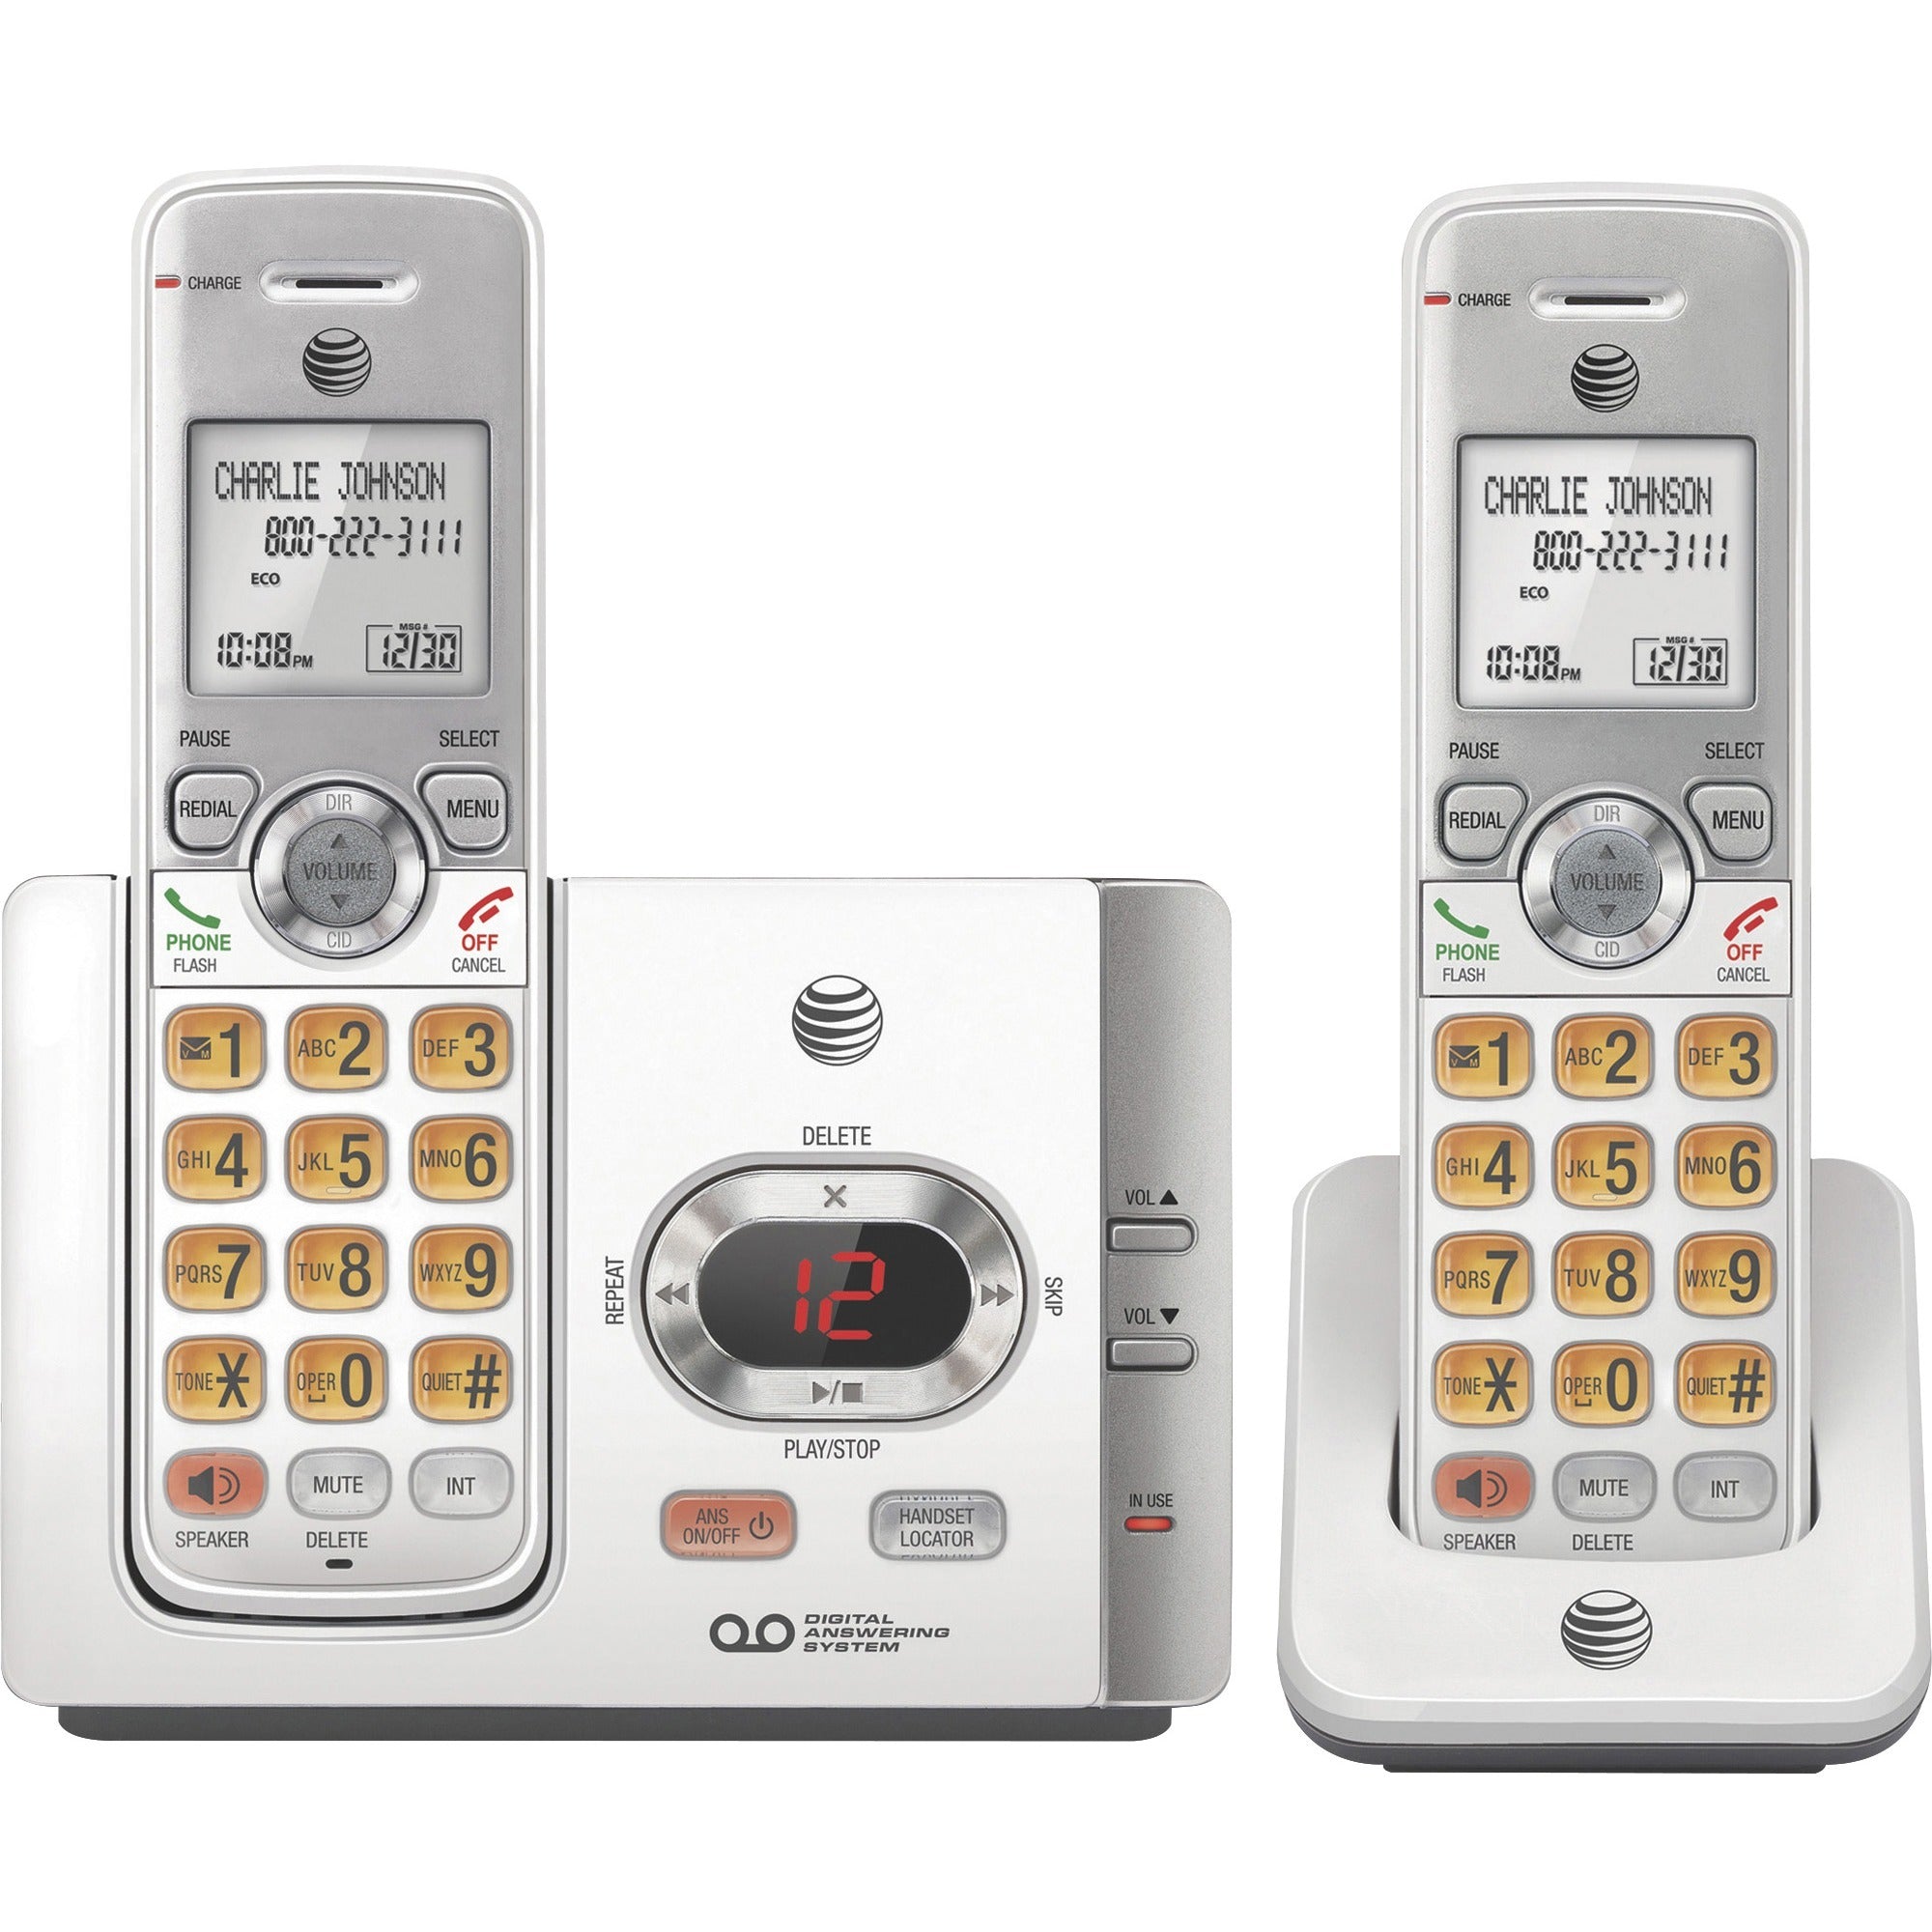 at&t-el52215-dect-60-cordless-phone-silver-black-cordless-1-x-phone-line-2-x-handset-speakerphone-answering-machine_attel52215 - 1